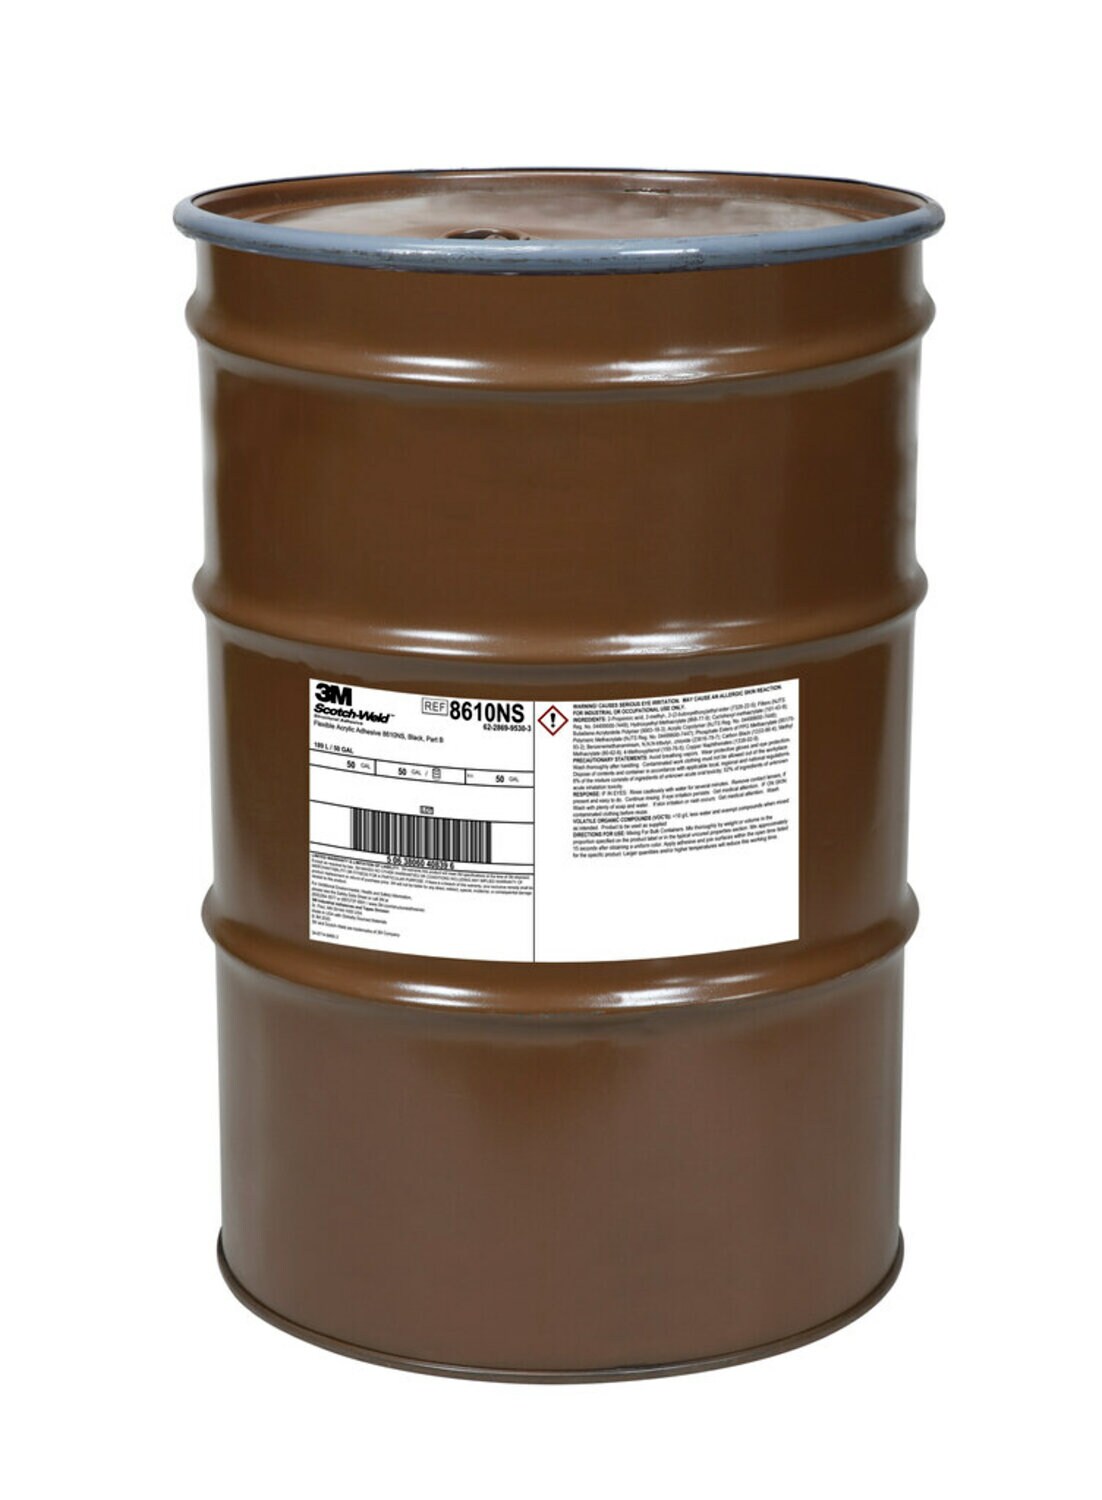 7100234570 - 3M Scotch-Weld Flexible Acrylic Adhesive 8610NS, Black, Part B, 55
Gallon (50 Gallon Net), Drum